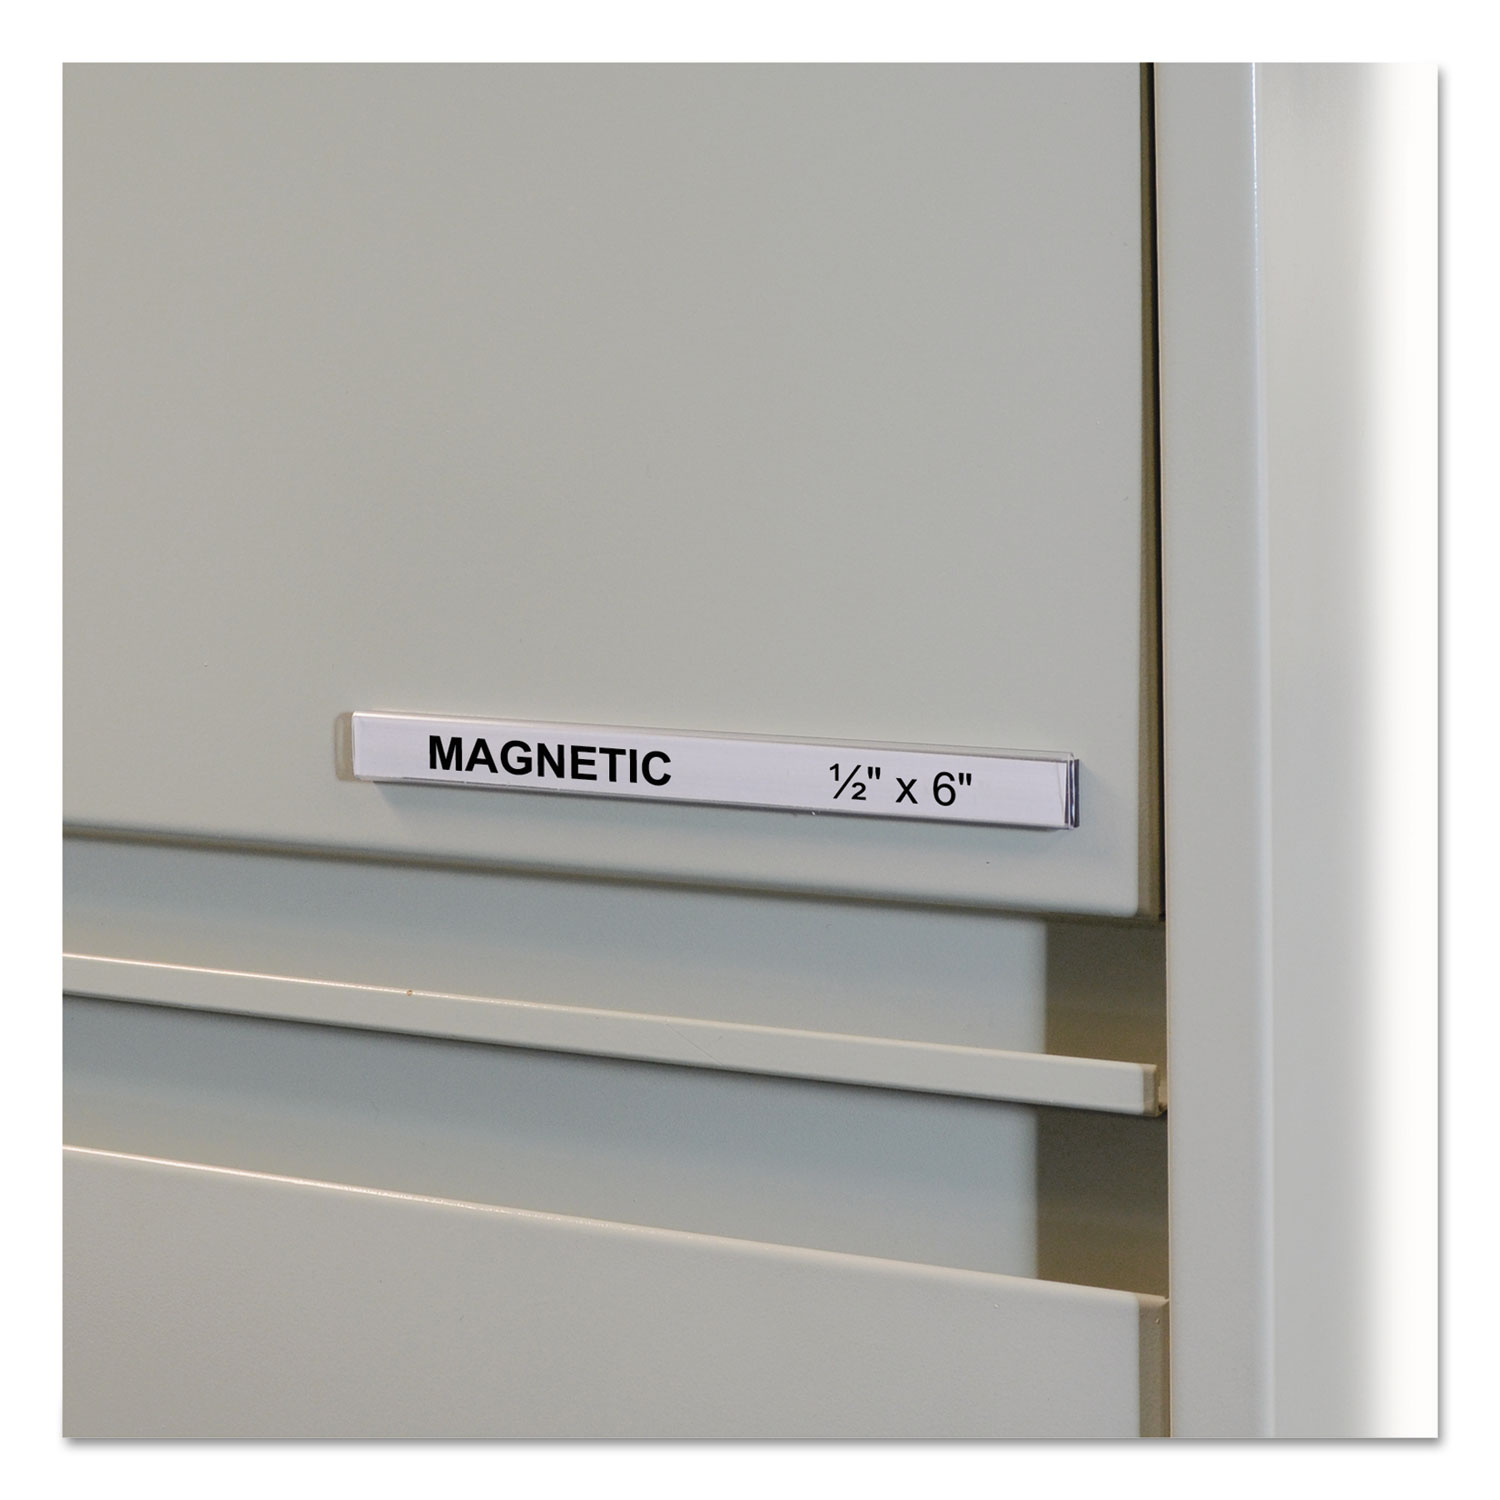 HOL-DEX Magnetic Shelf/Bin Label Holders, Side Load, 1/2" x 6", Clear, 10/Box